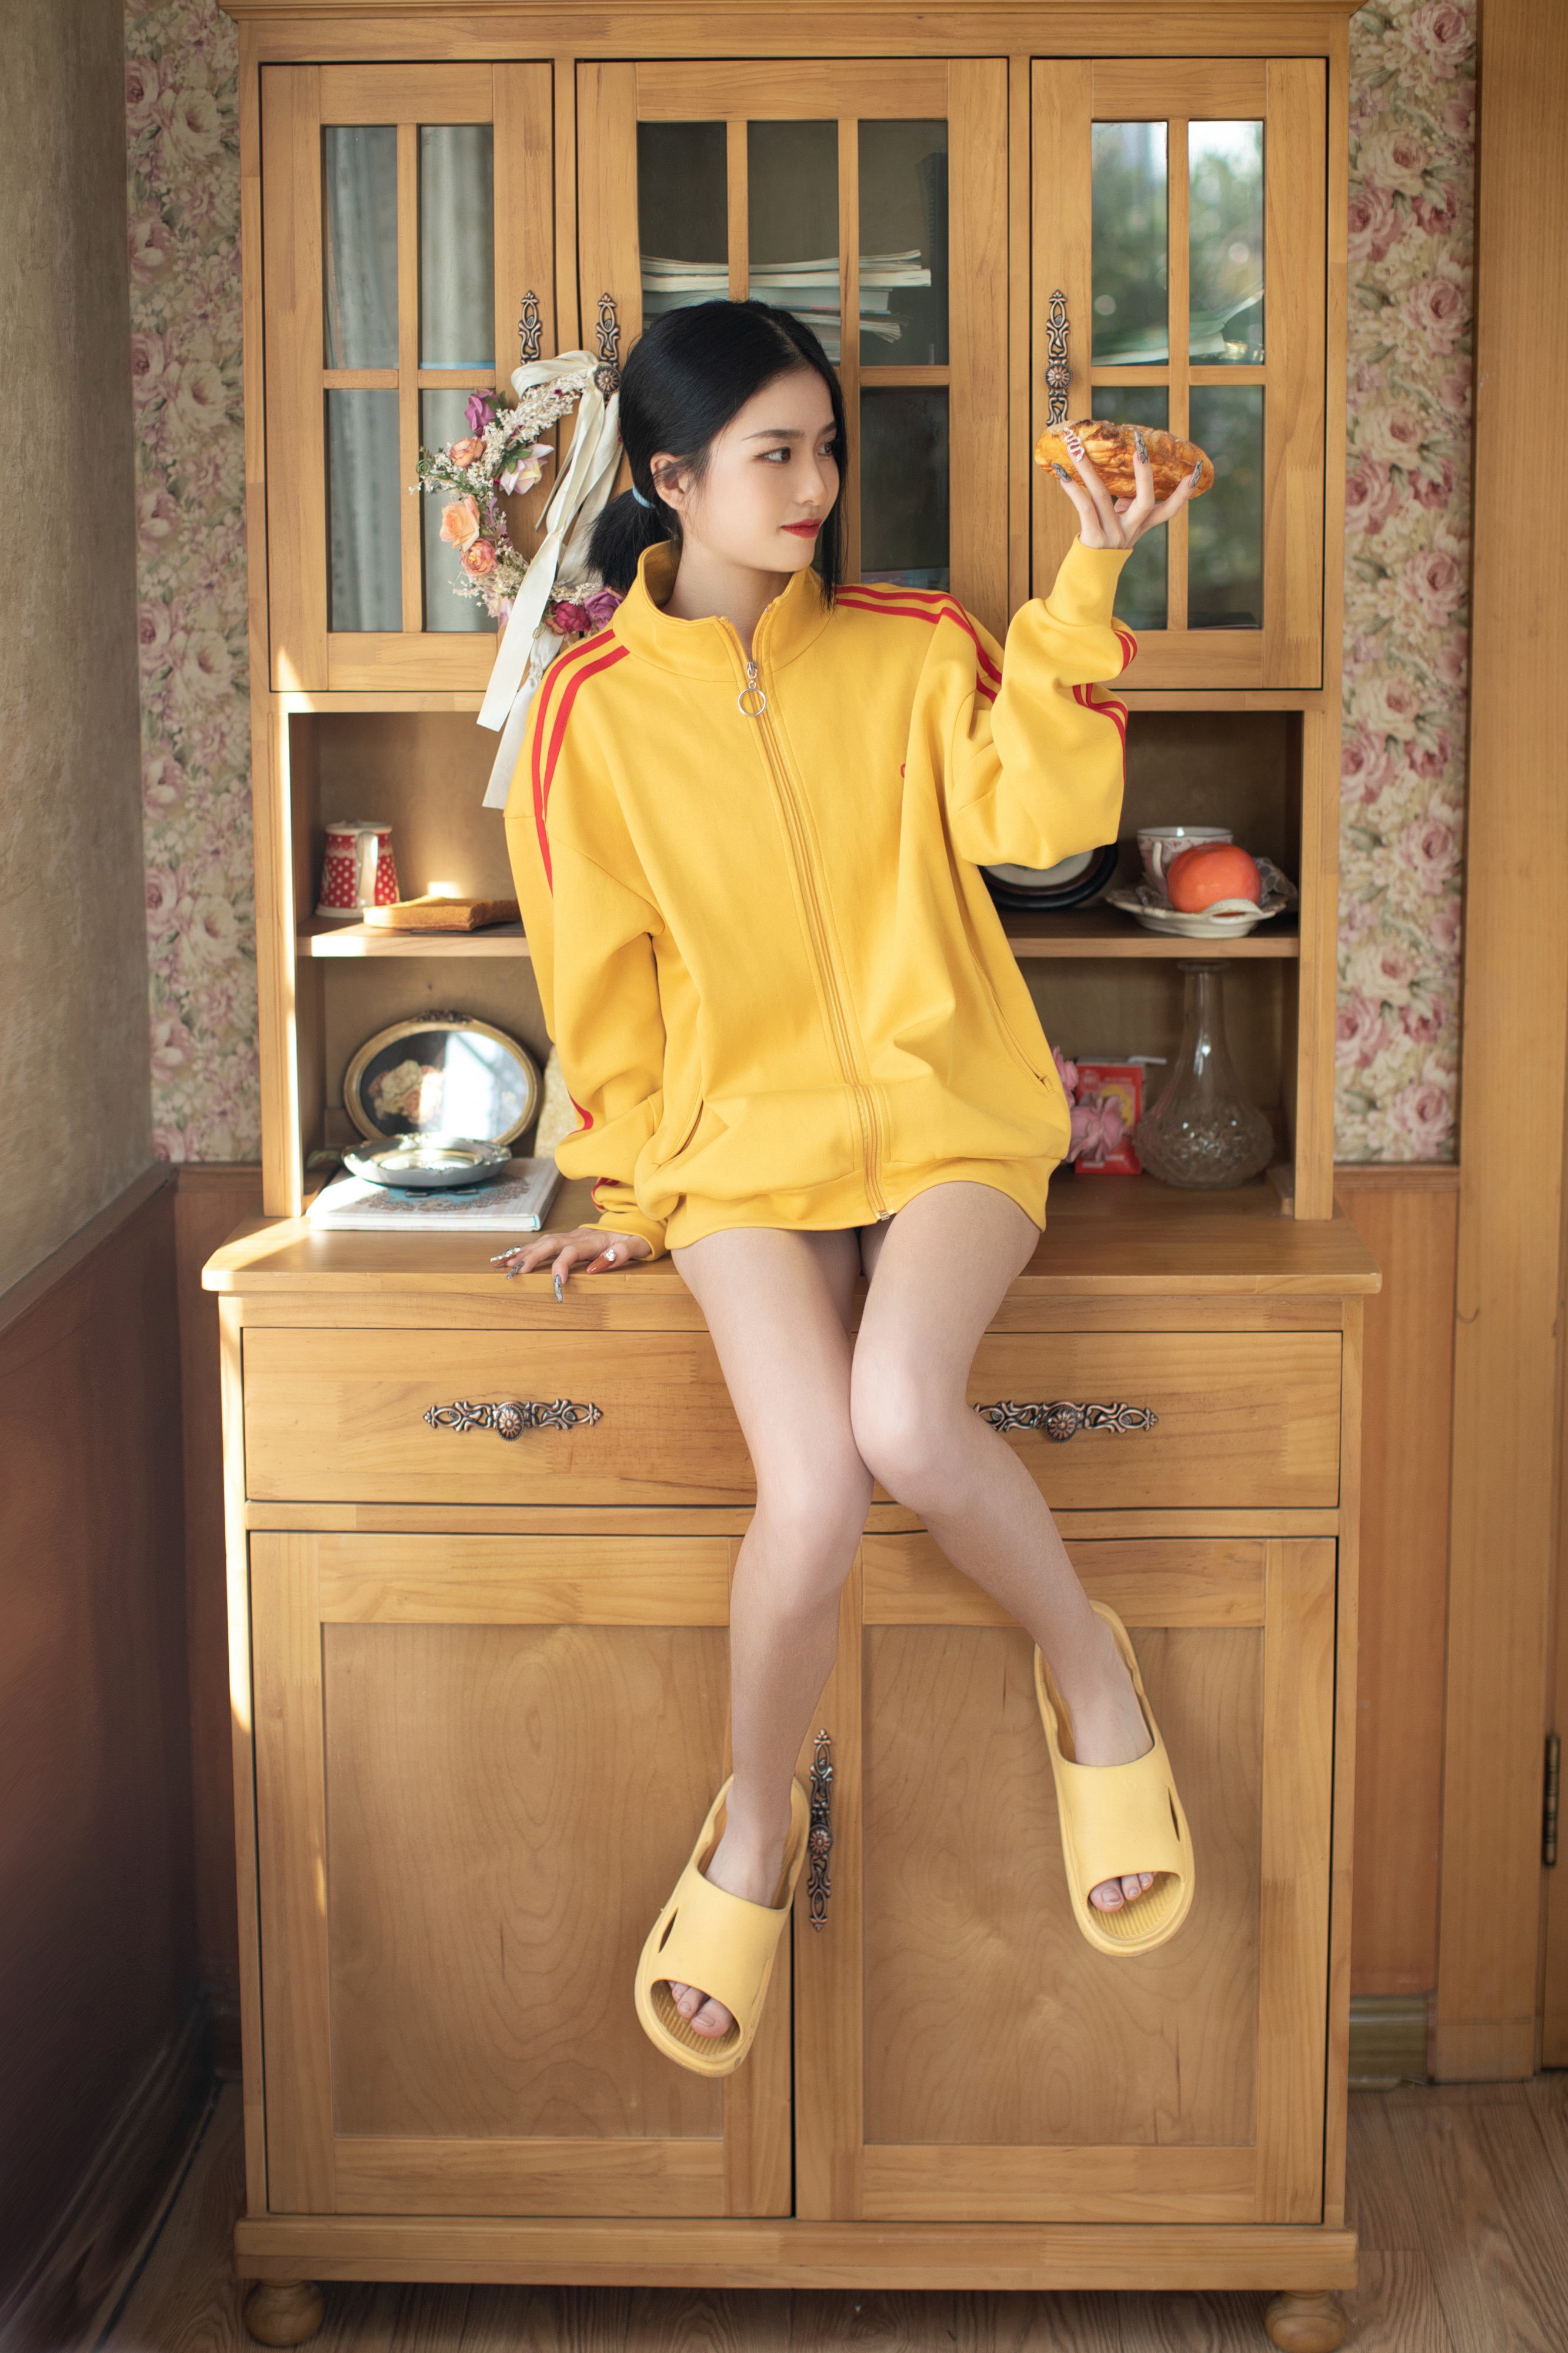 Women Chinese Model Asian Yellow Tops Sweater 2666x4000